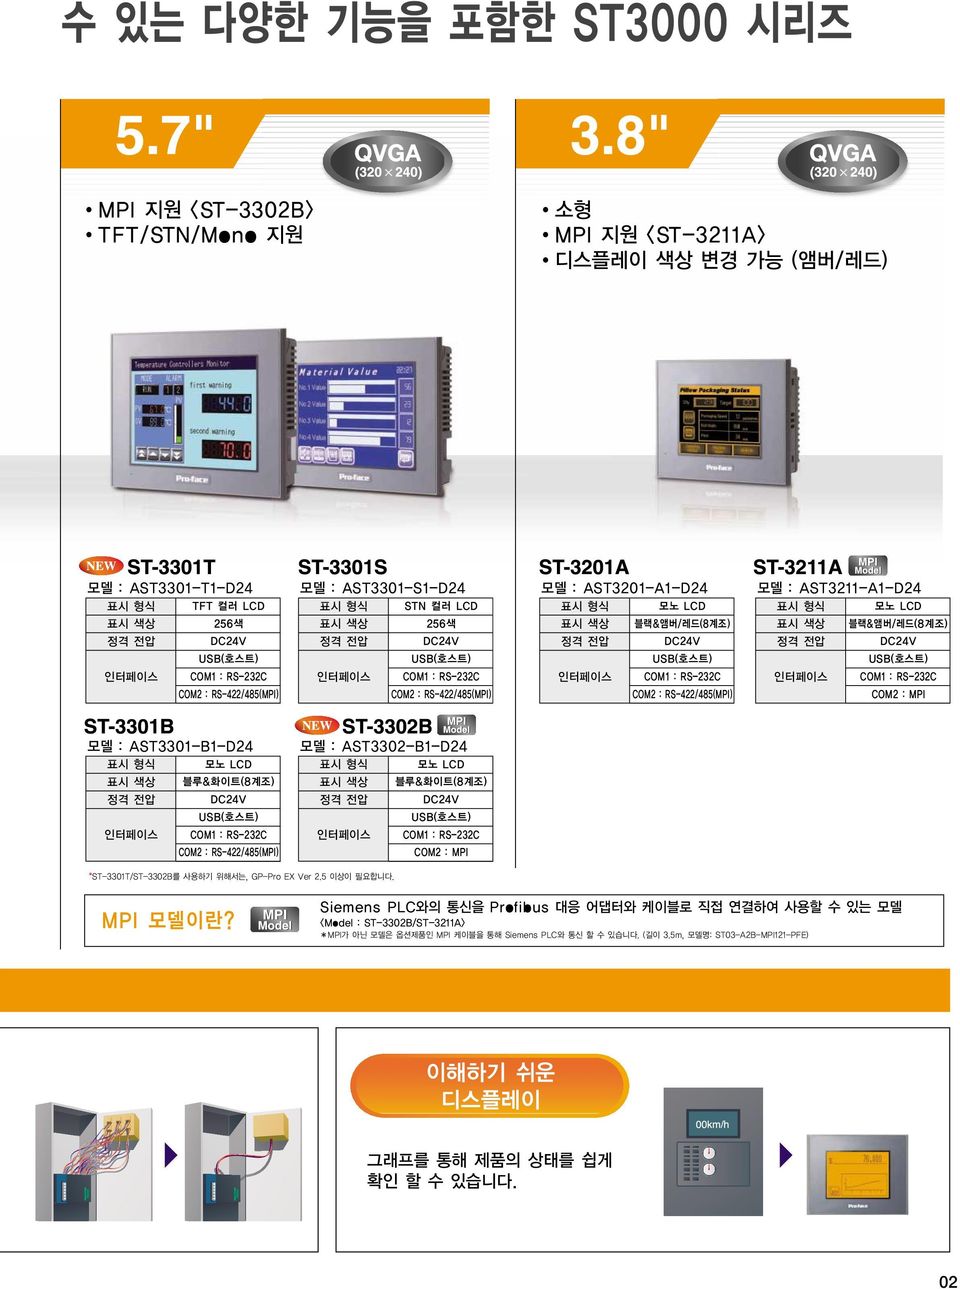 LCD 블루&화이트(8계조) 블루&화이트(8계조) COM2 : MPI *ST-3301T/ST-3302B를 사용하기 위해서는, GP-Pro EX Ver 2.5 이상이 필요합니다. MPI 모델이란?